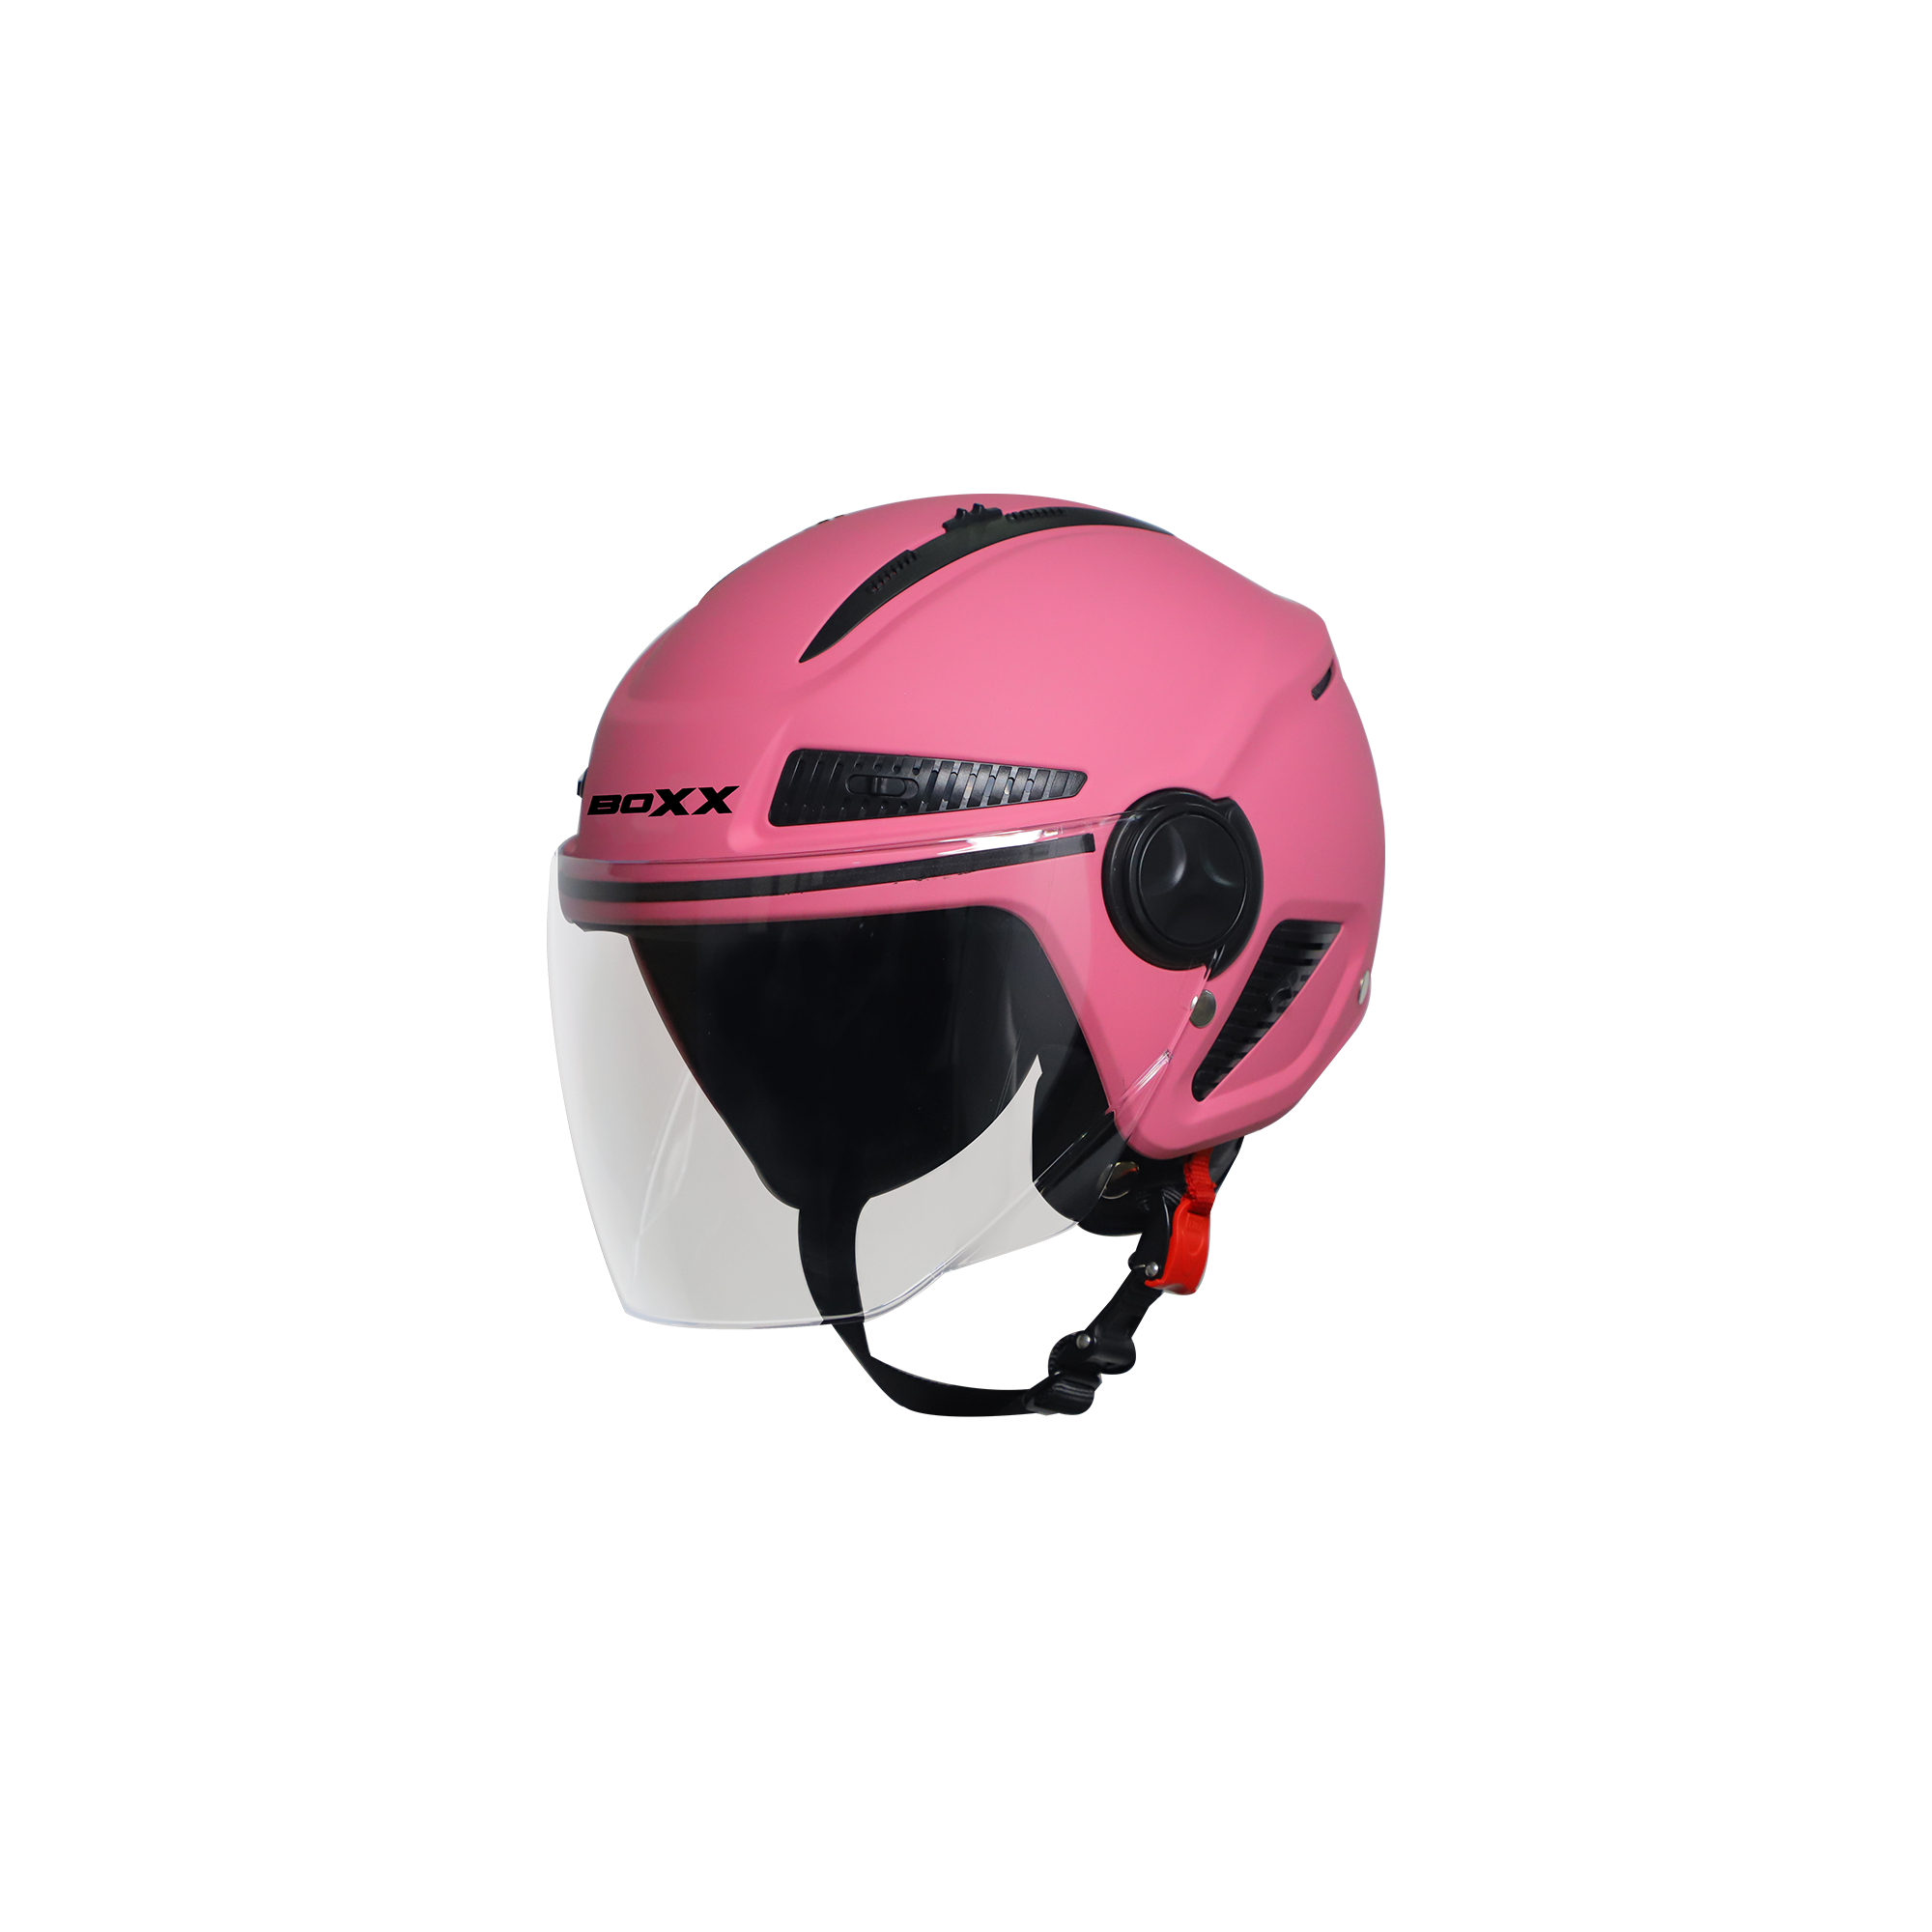 Steelbird SBH-24 Boxx ISI Certified Open Face Helmet For Men And Women (Matt Dark Pink With Clear Visor)